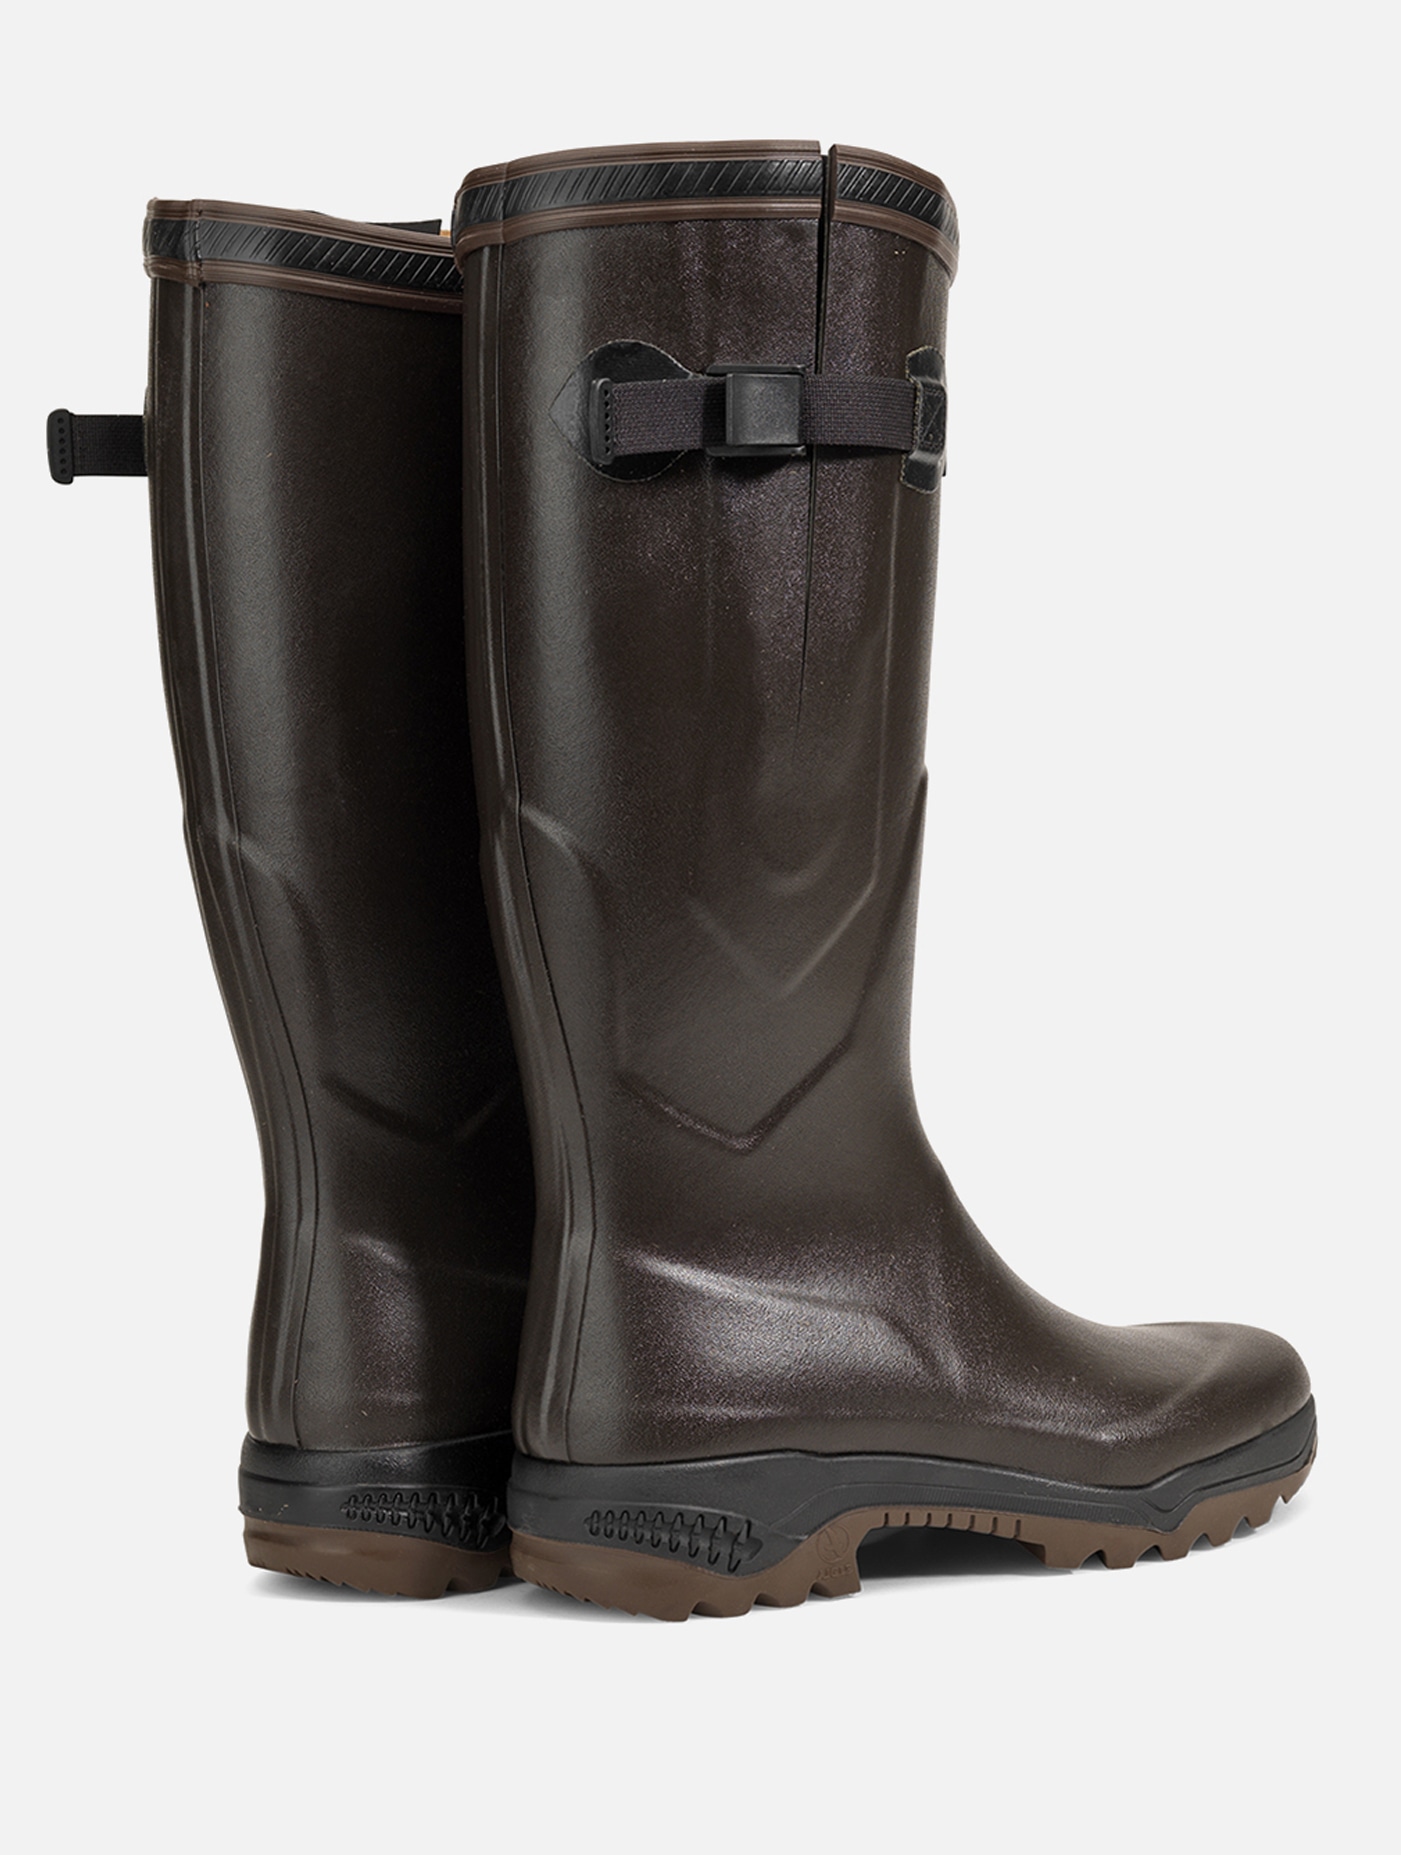 Aigle - Adjustable boots, in France Bronze - Parcours® 2 variomen | AIGLE